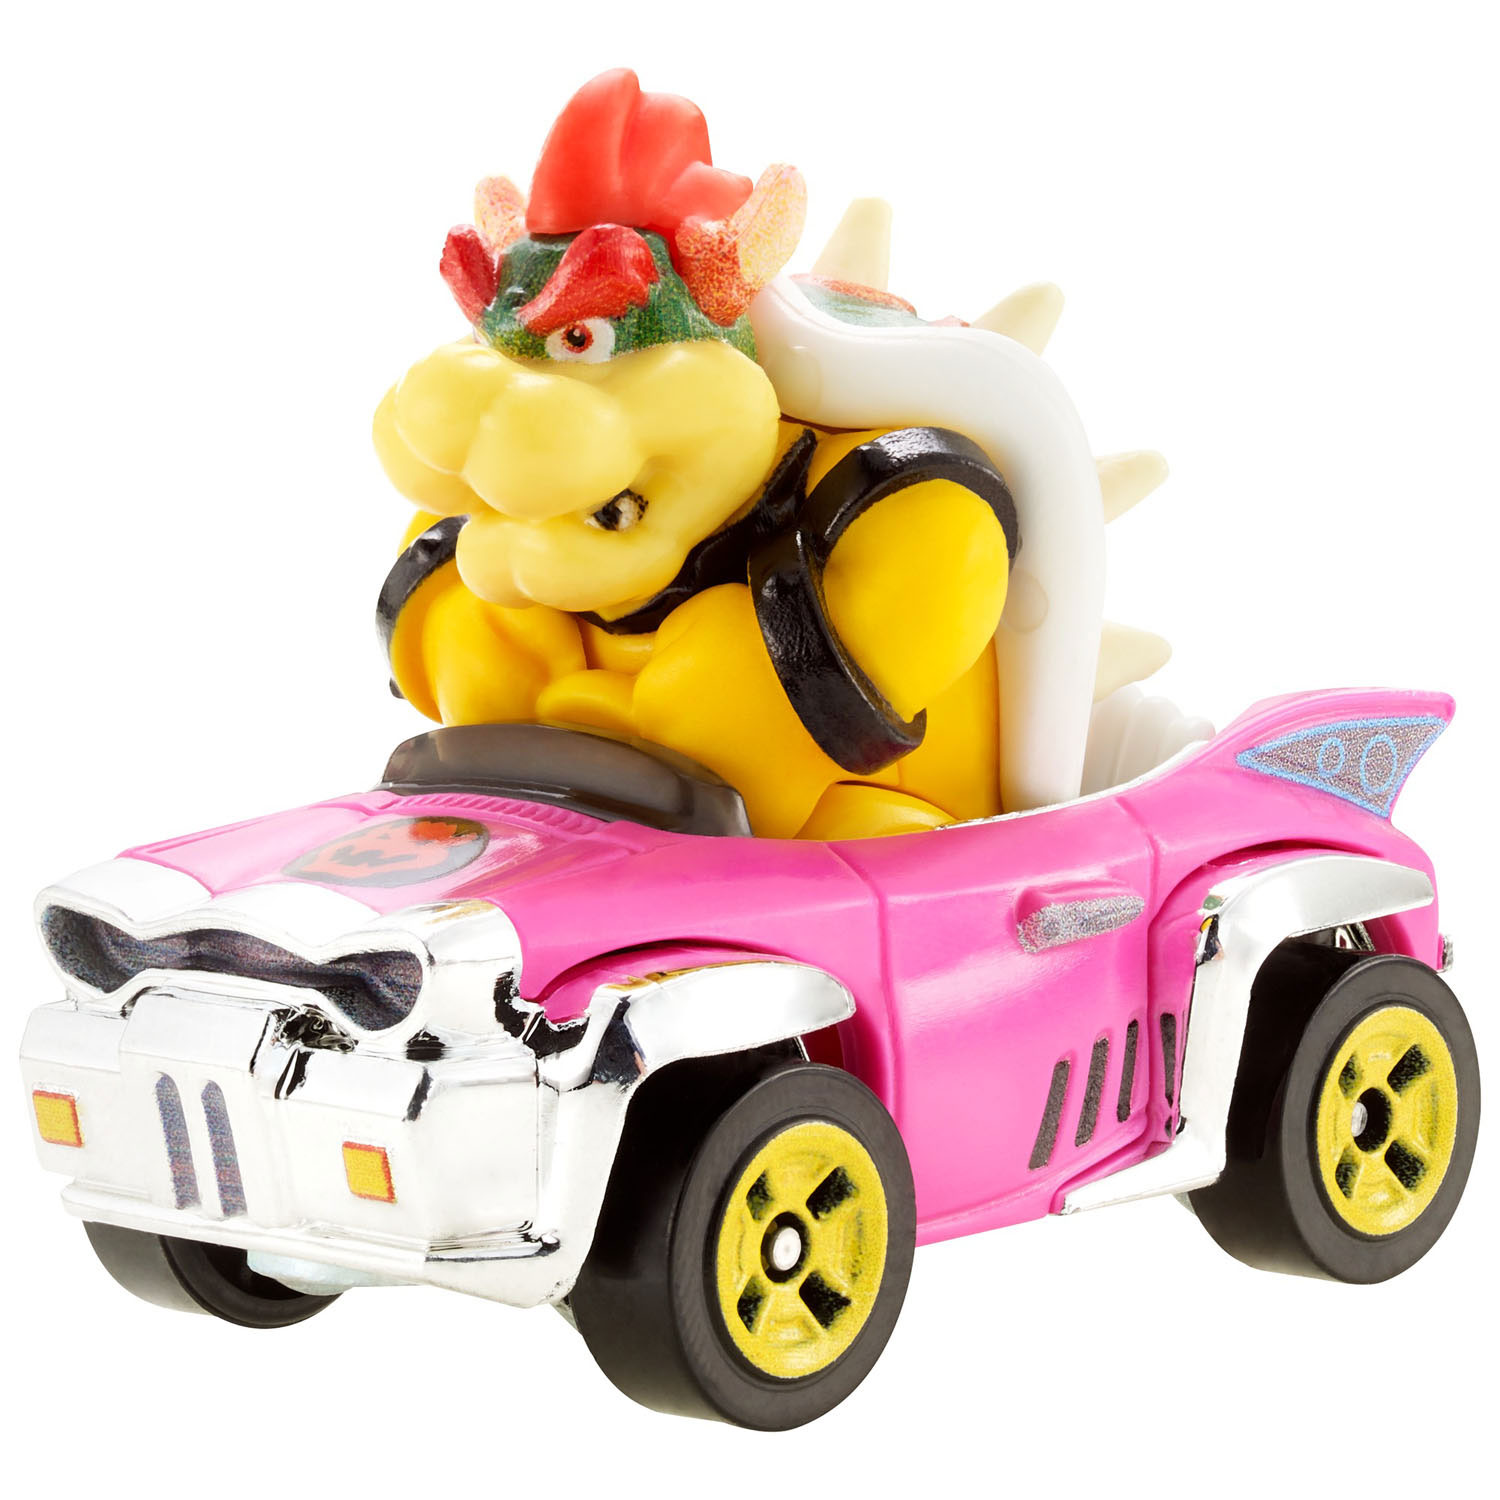 Hot Wheels Mario Kart Replica Die-cast Auto - Bowser